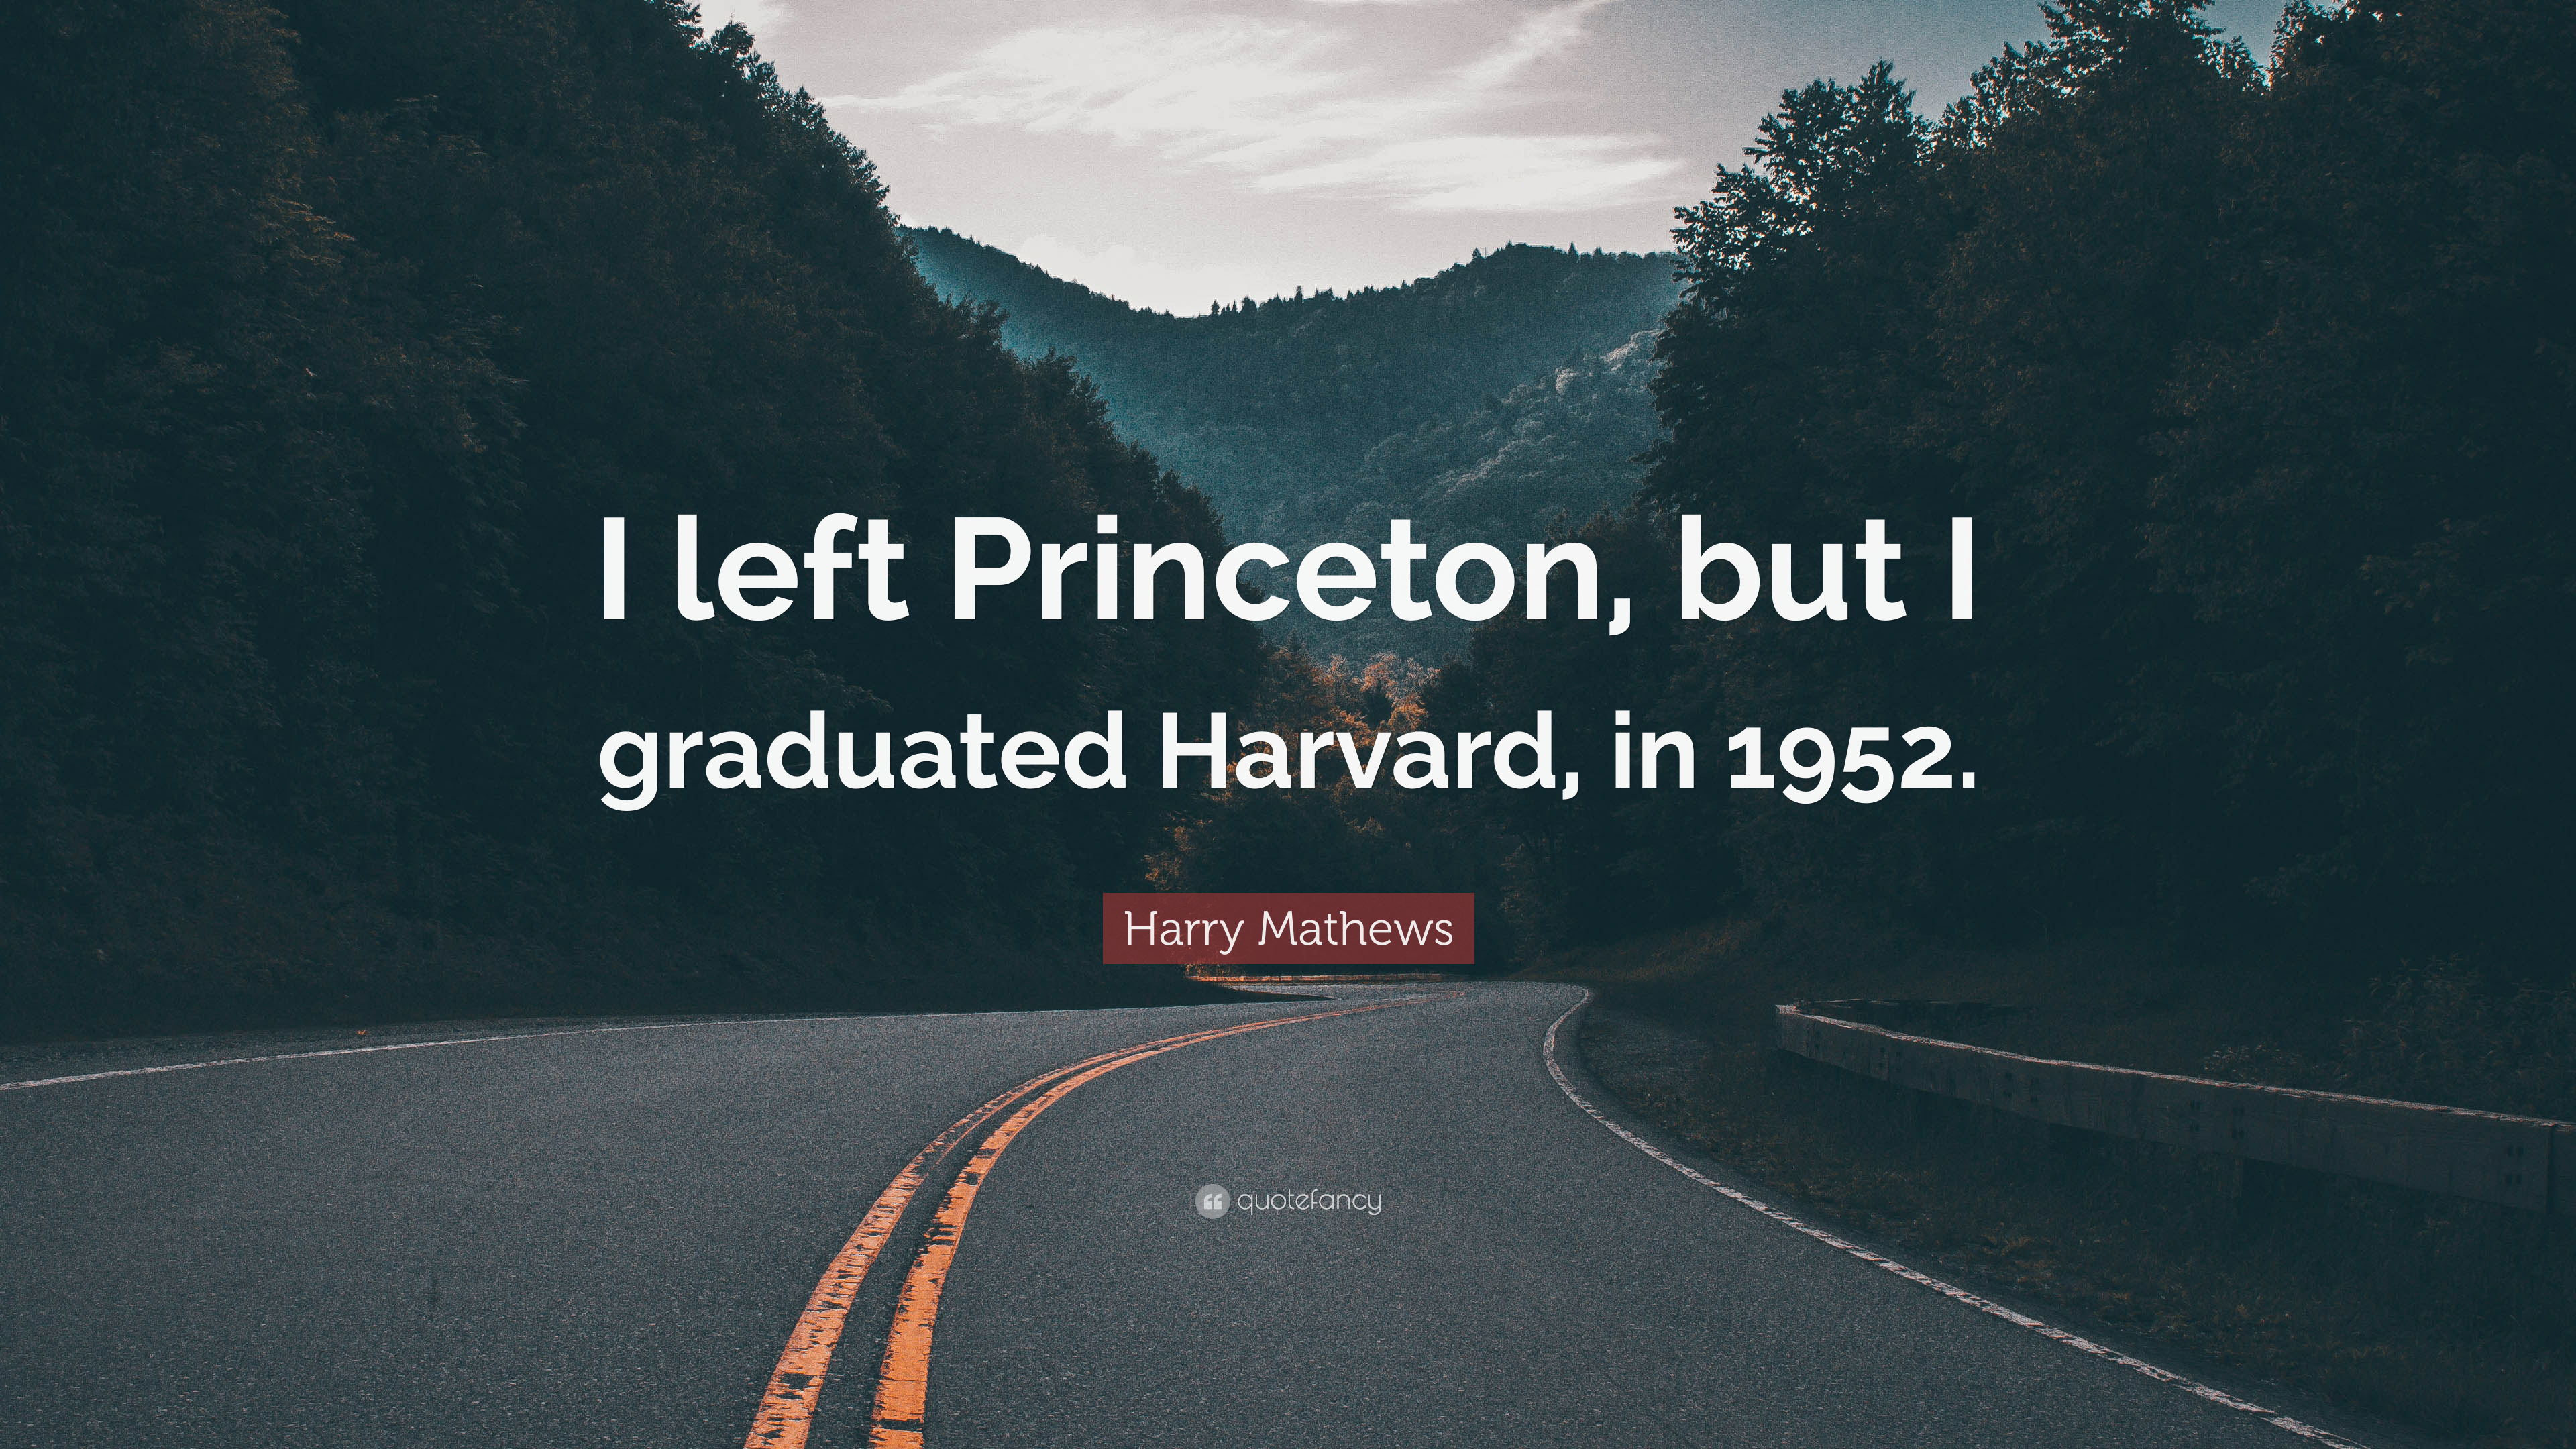 Harry Mathews Quote: “I left Princeton, but I graduated Harvard